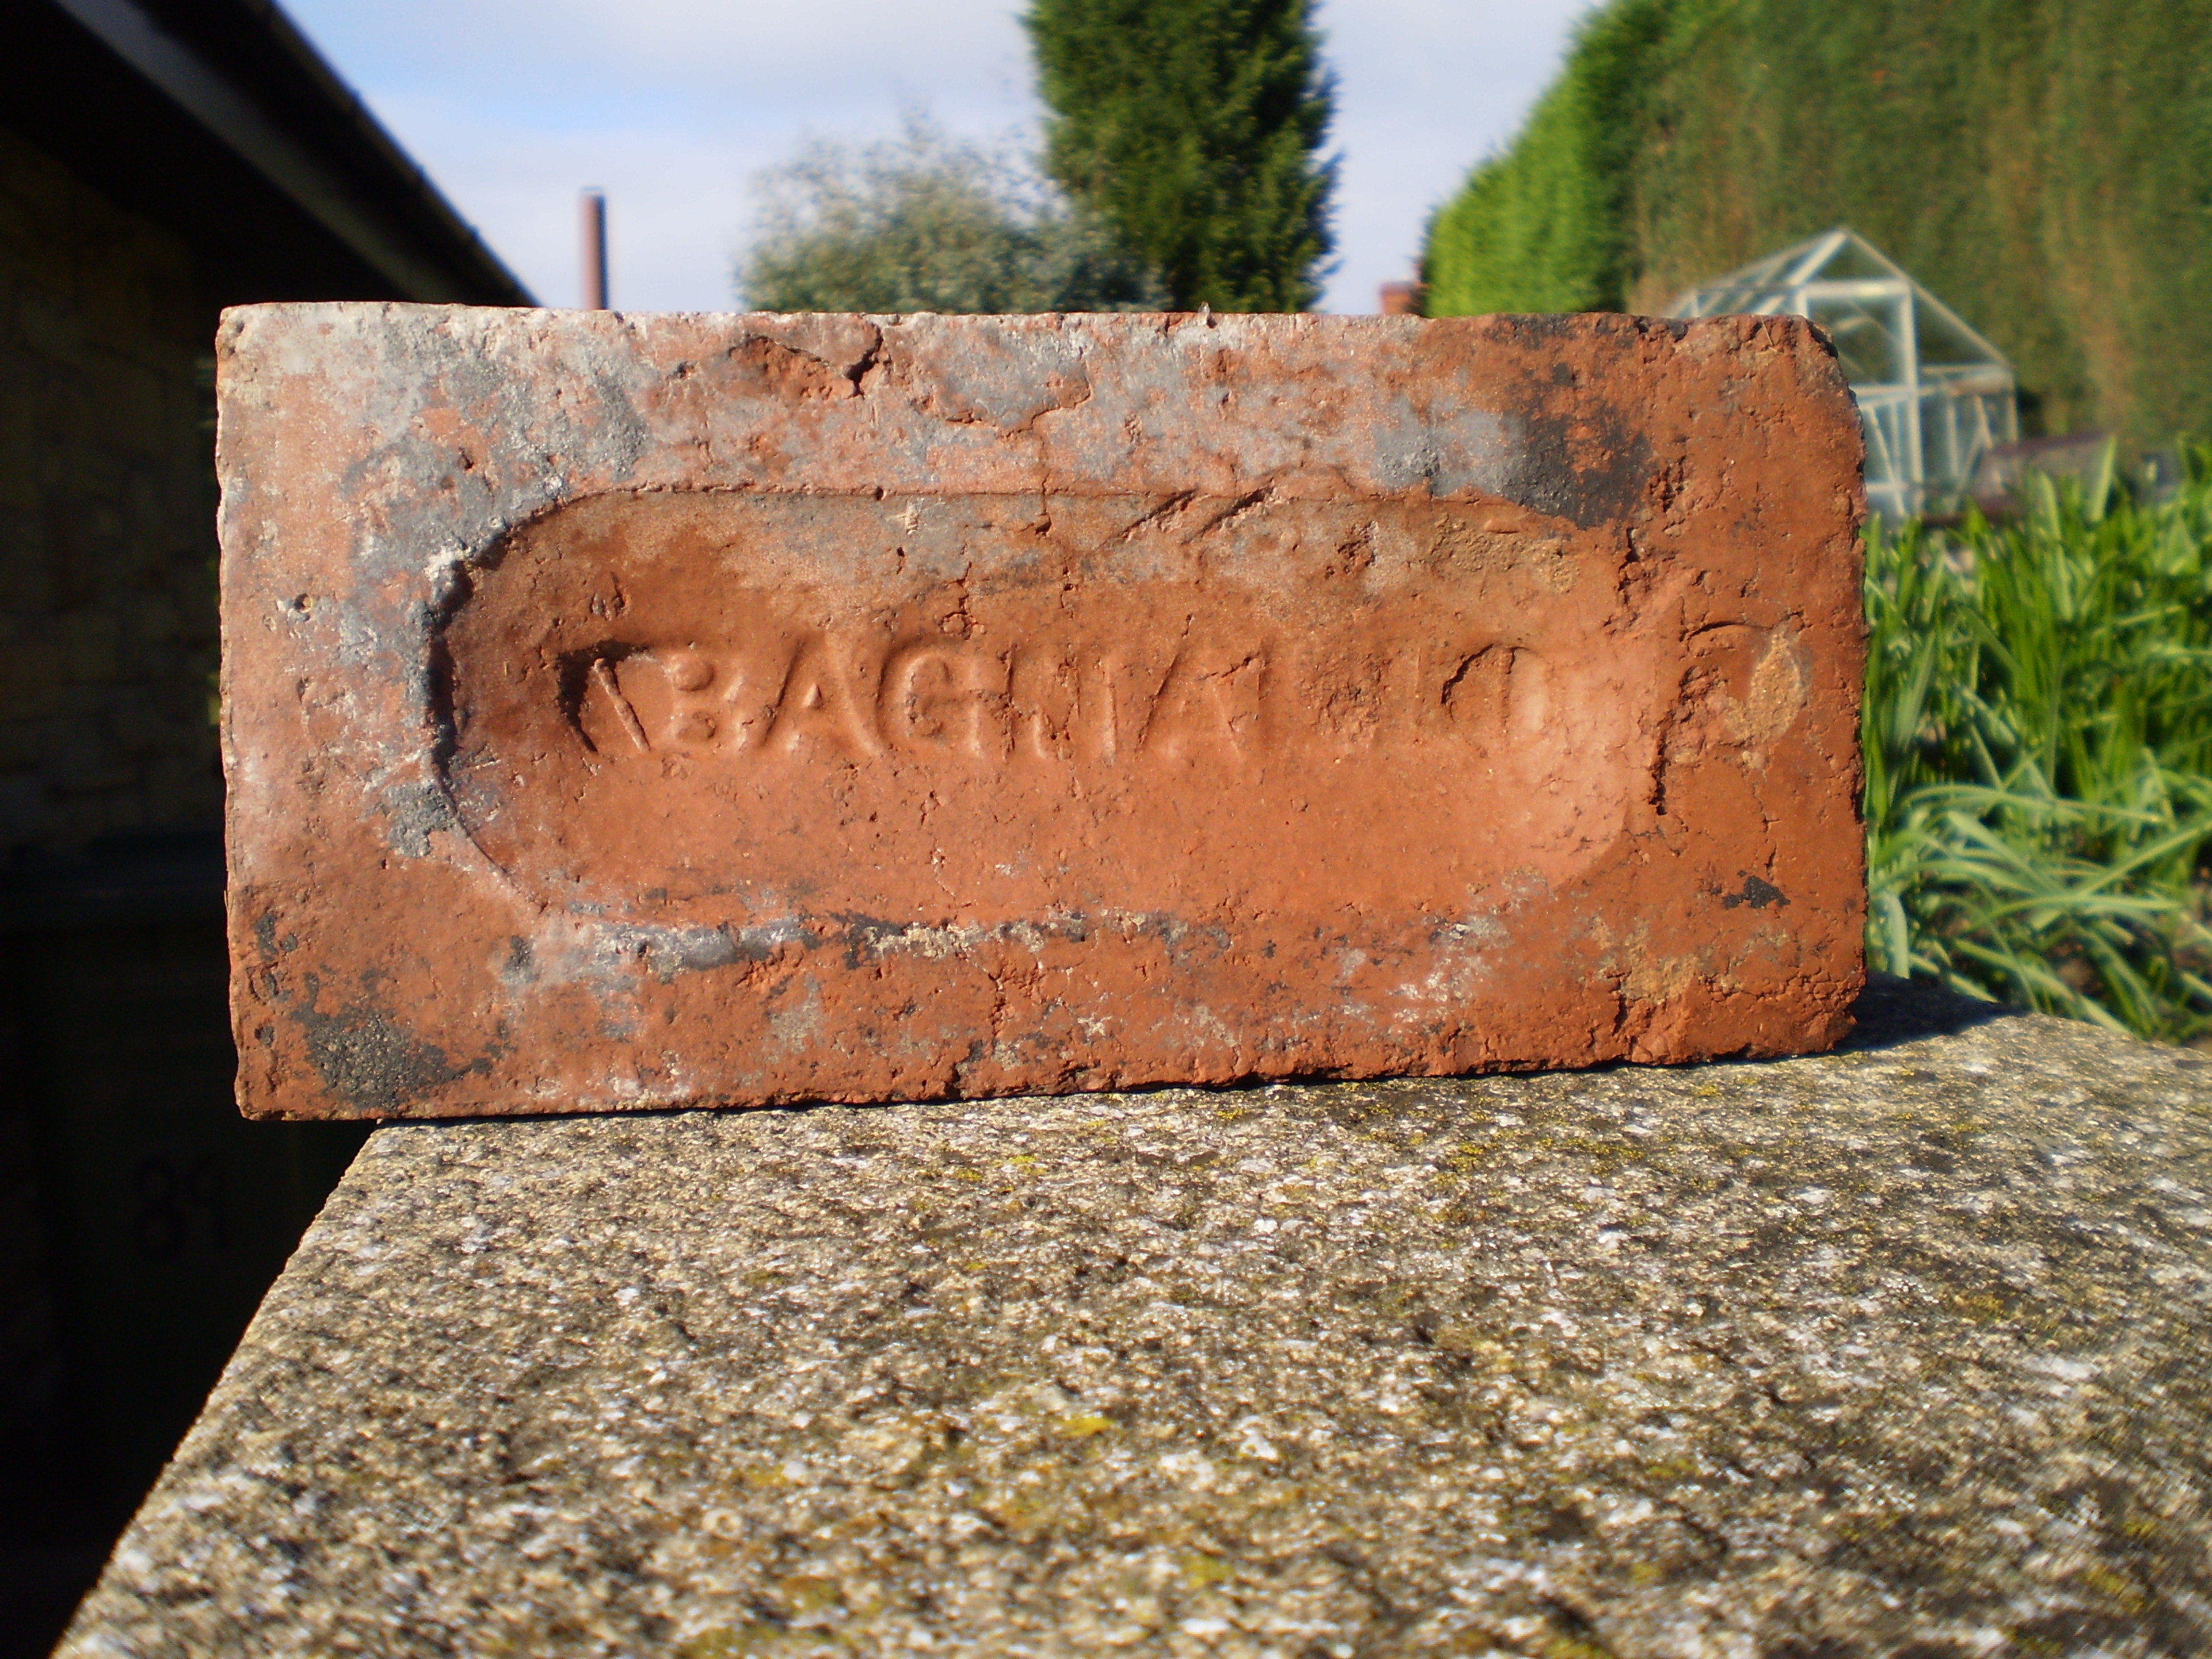 Bagnall Brick